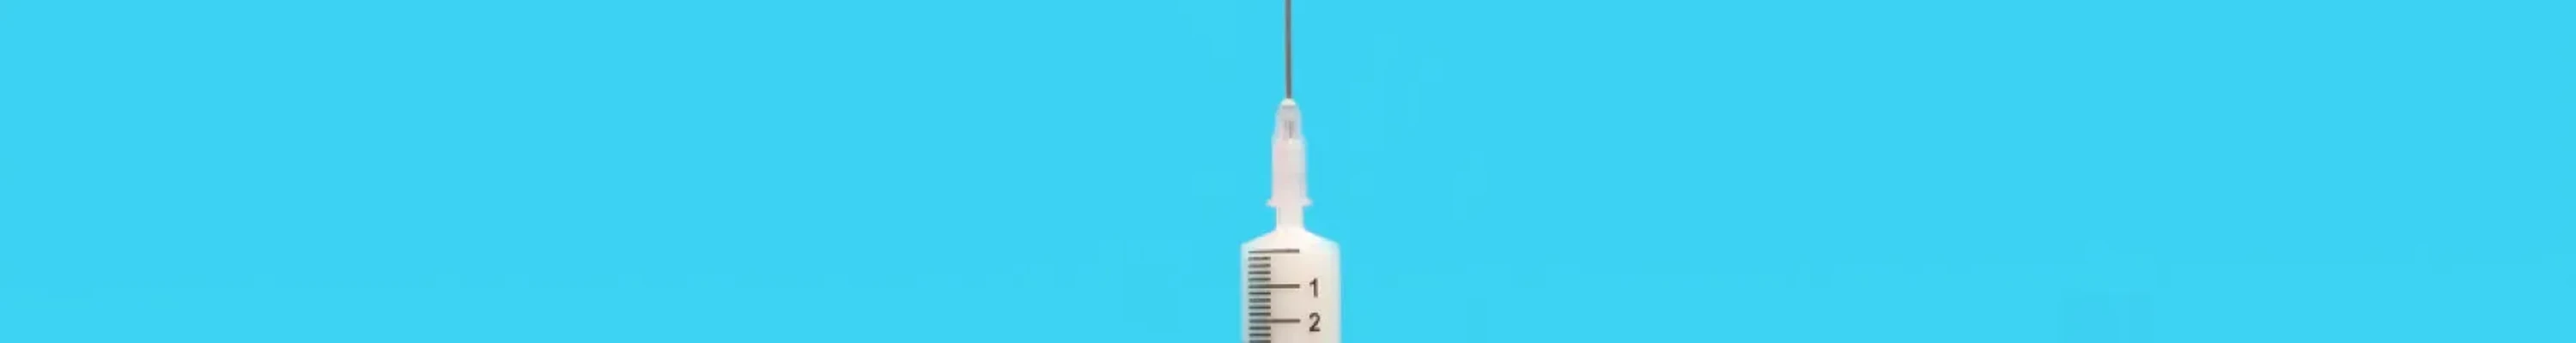 Top of a vaccine vessel